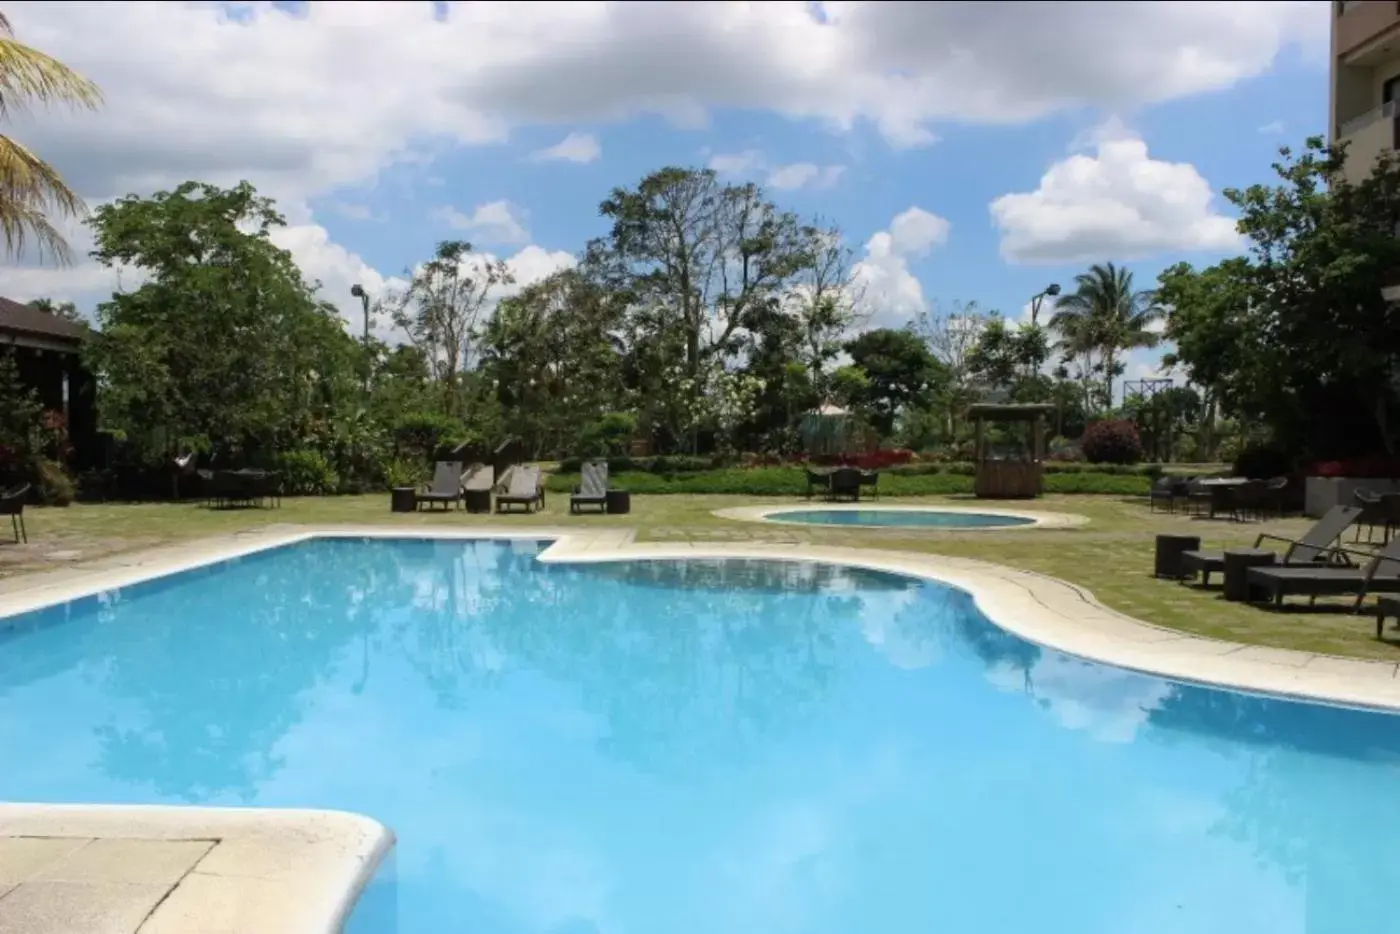 Swimming Pool in Hotel Kimberly Tagaytay